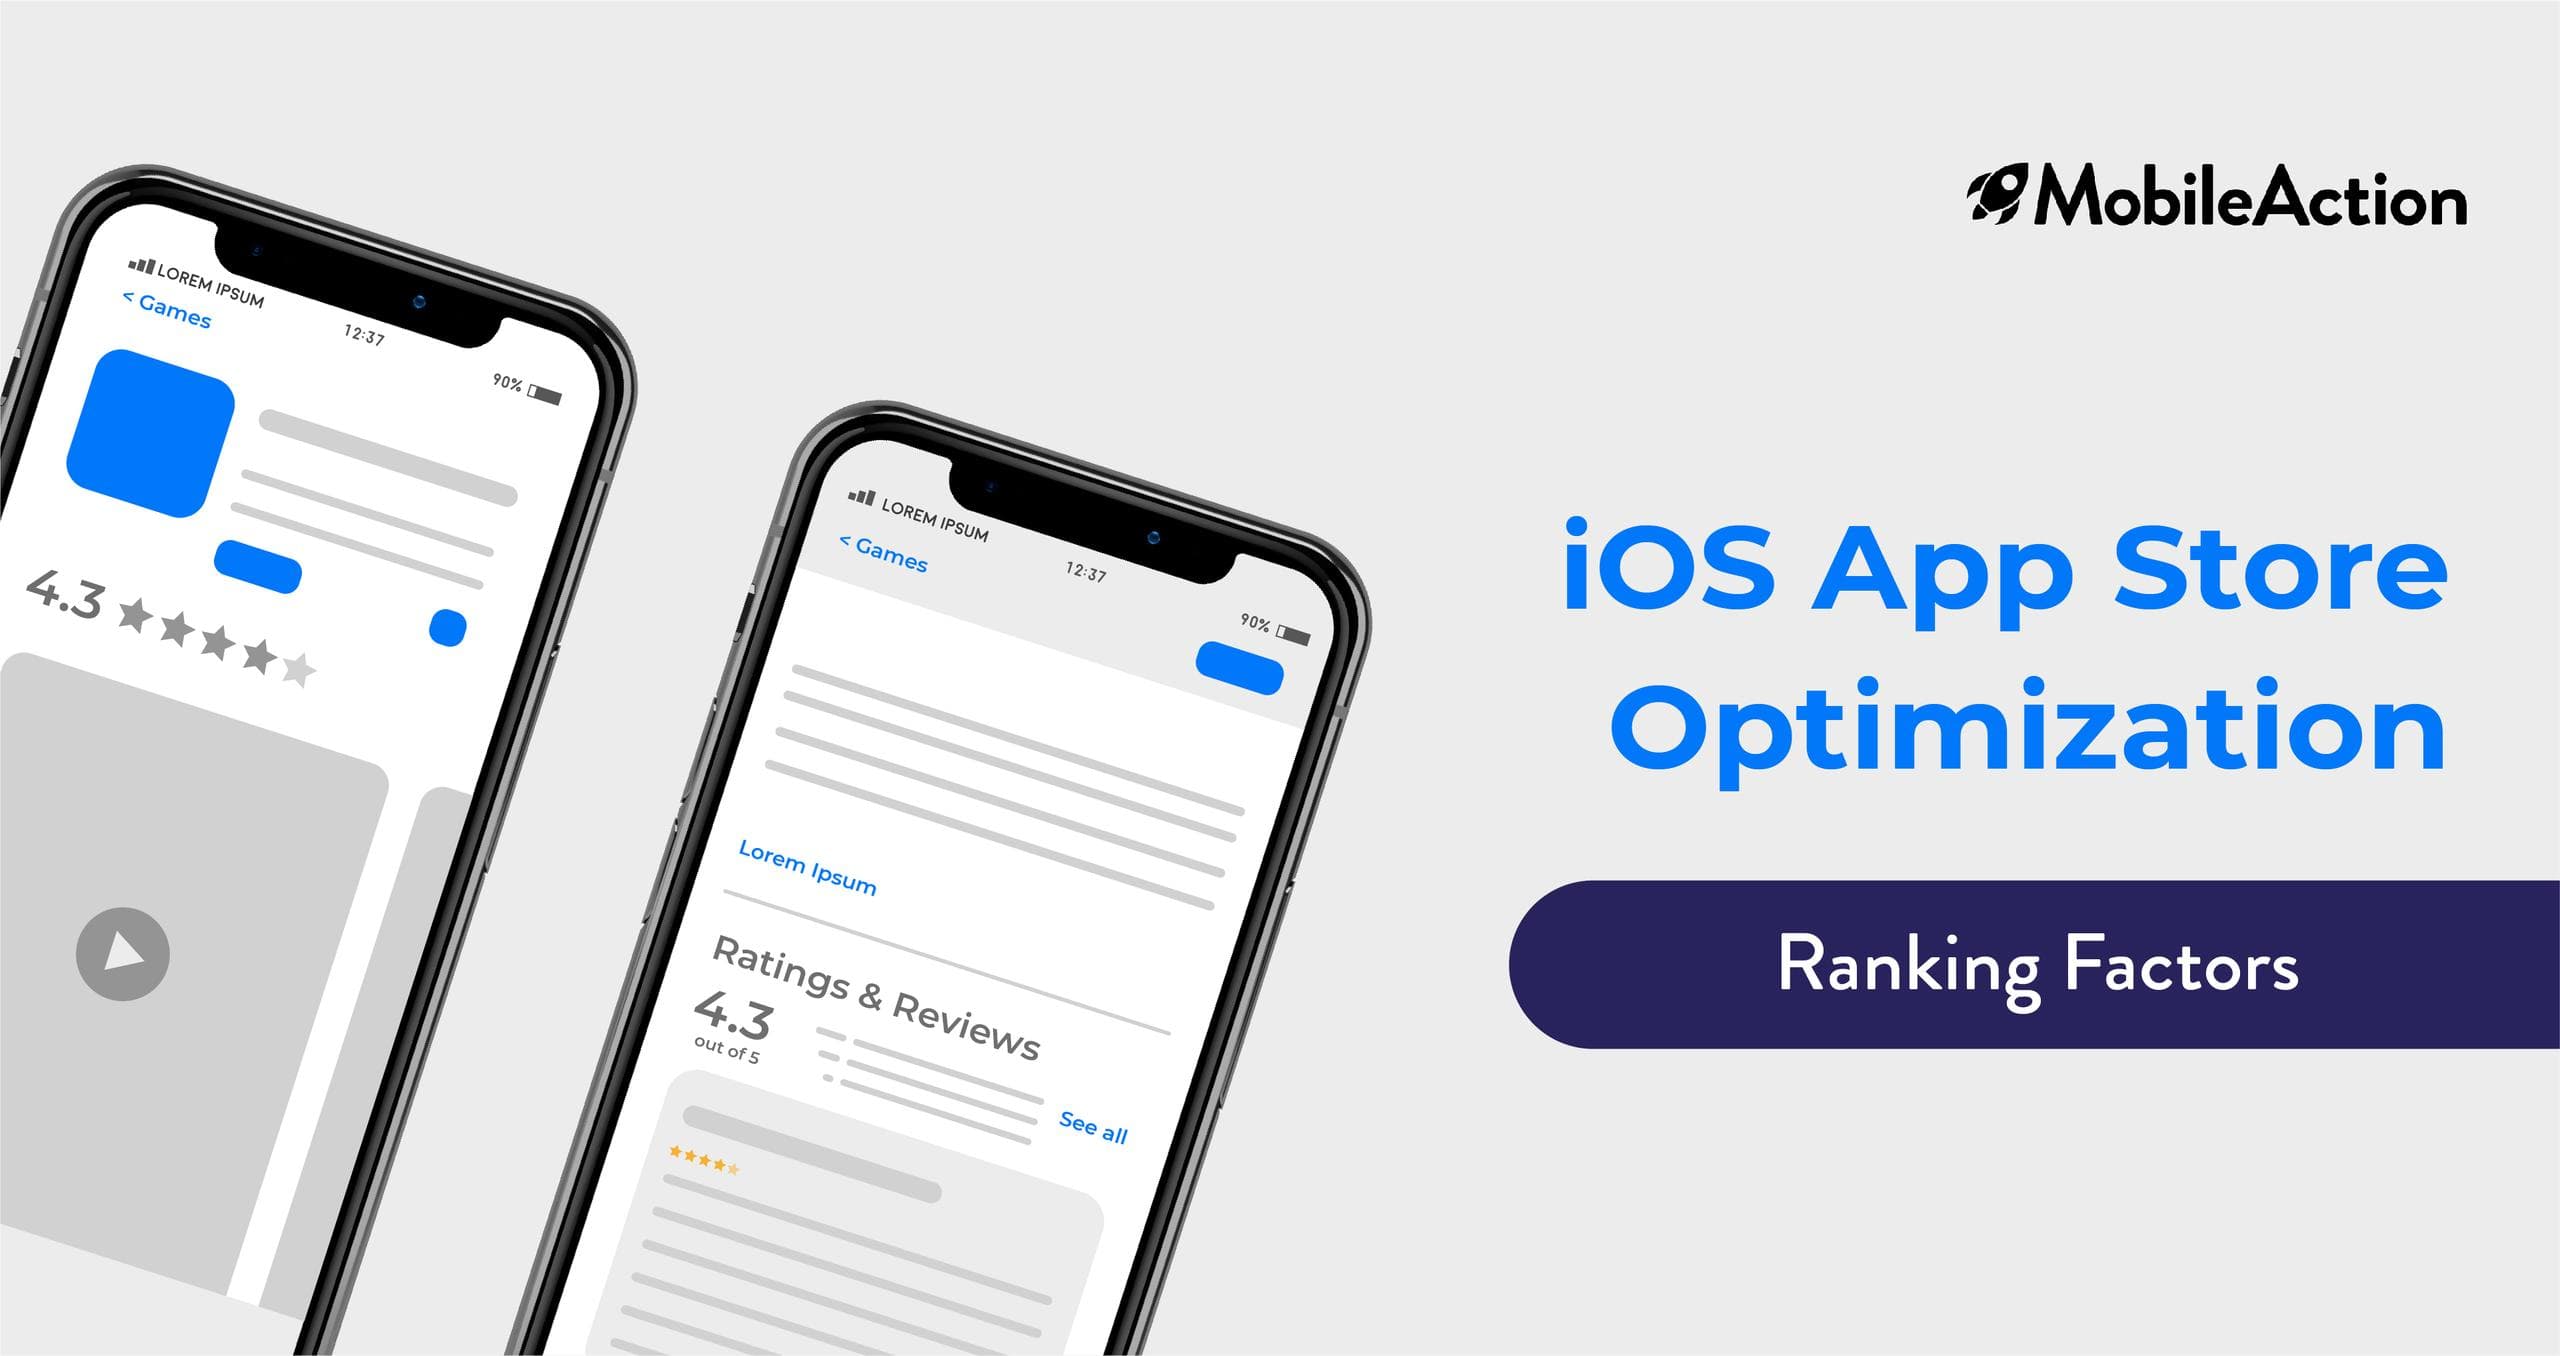 IOS App Store Optimization Ranking Factors